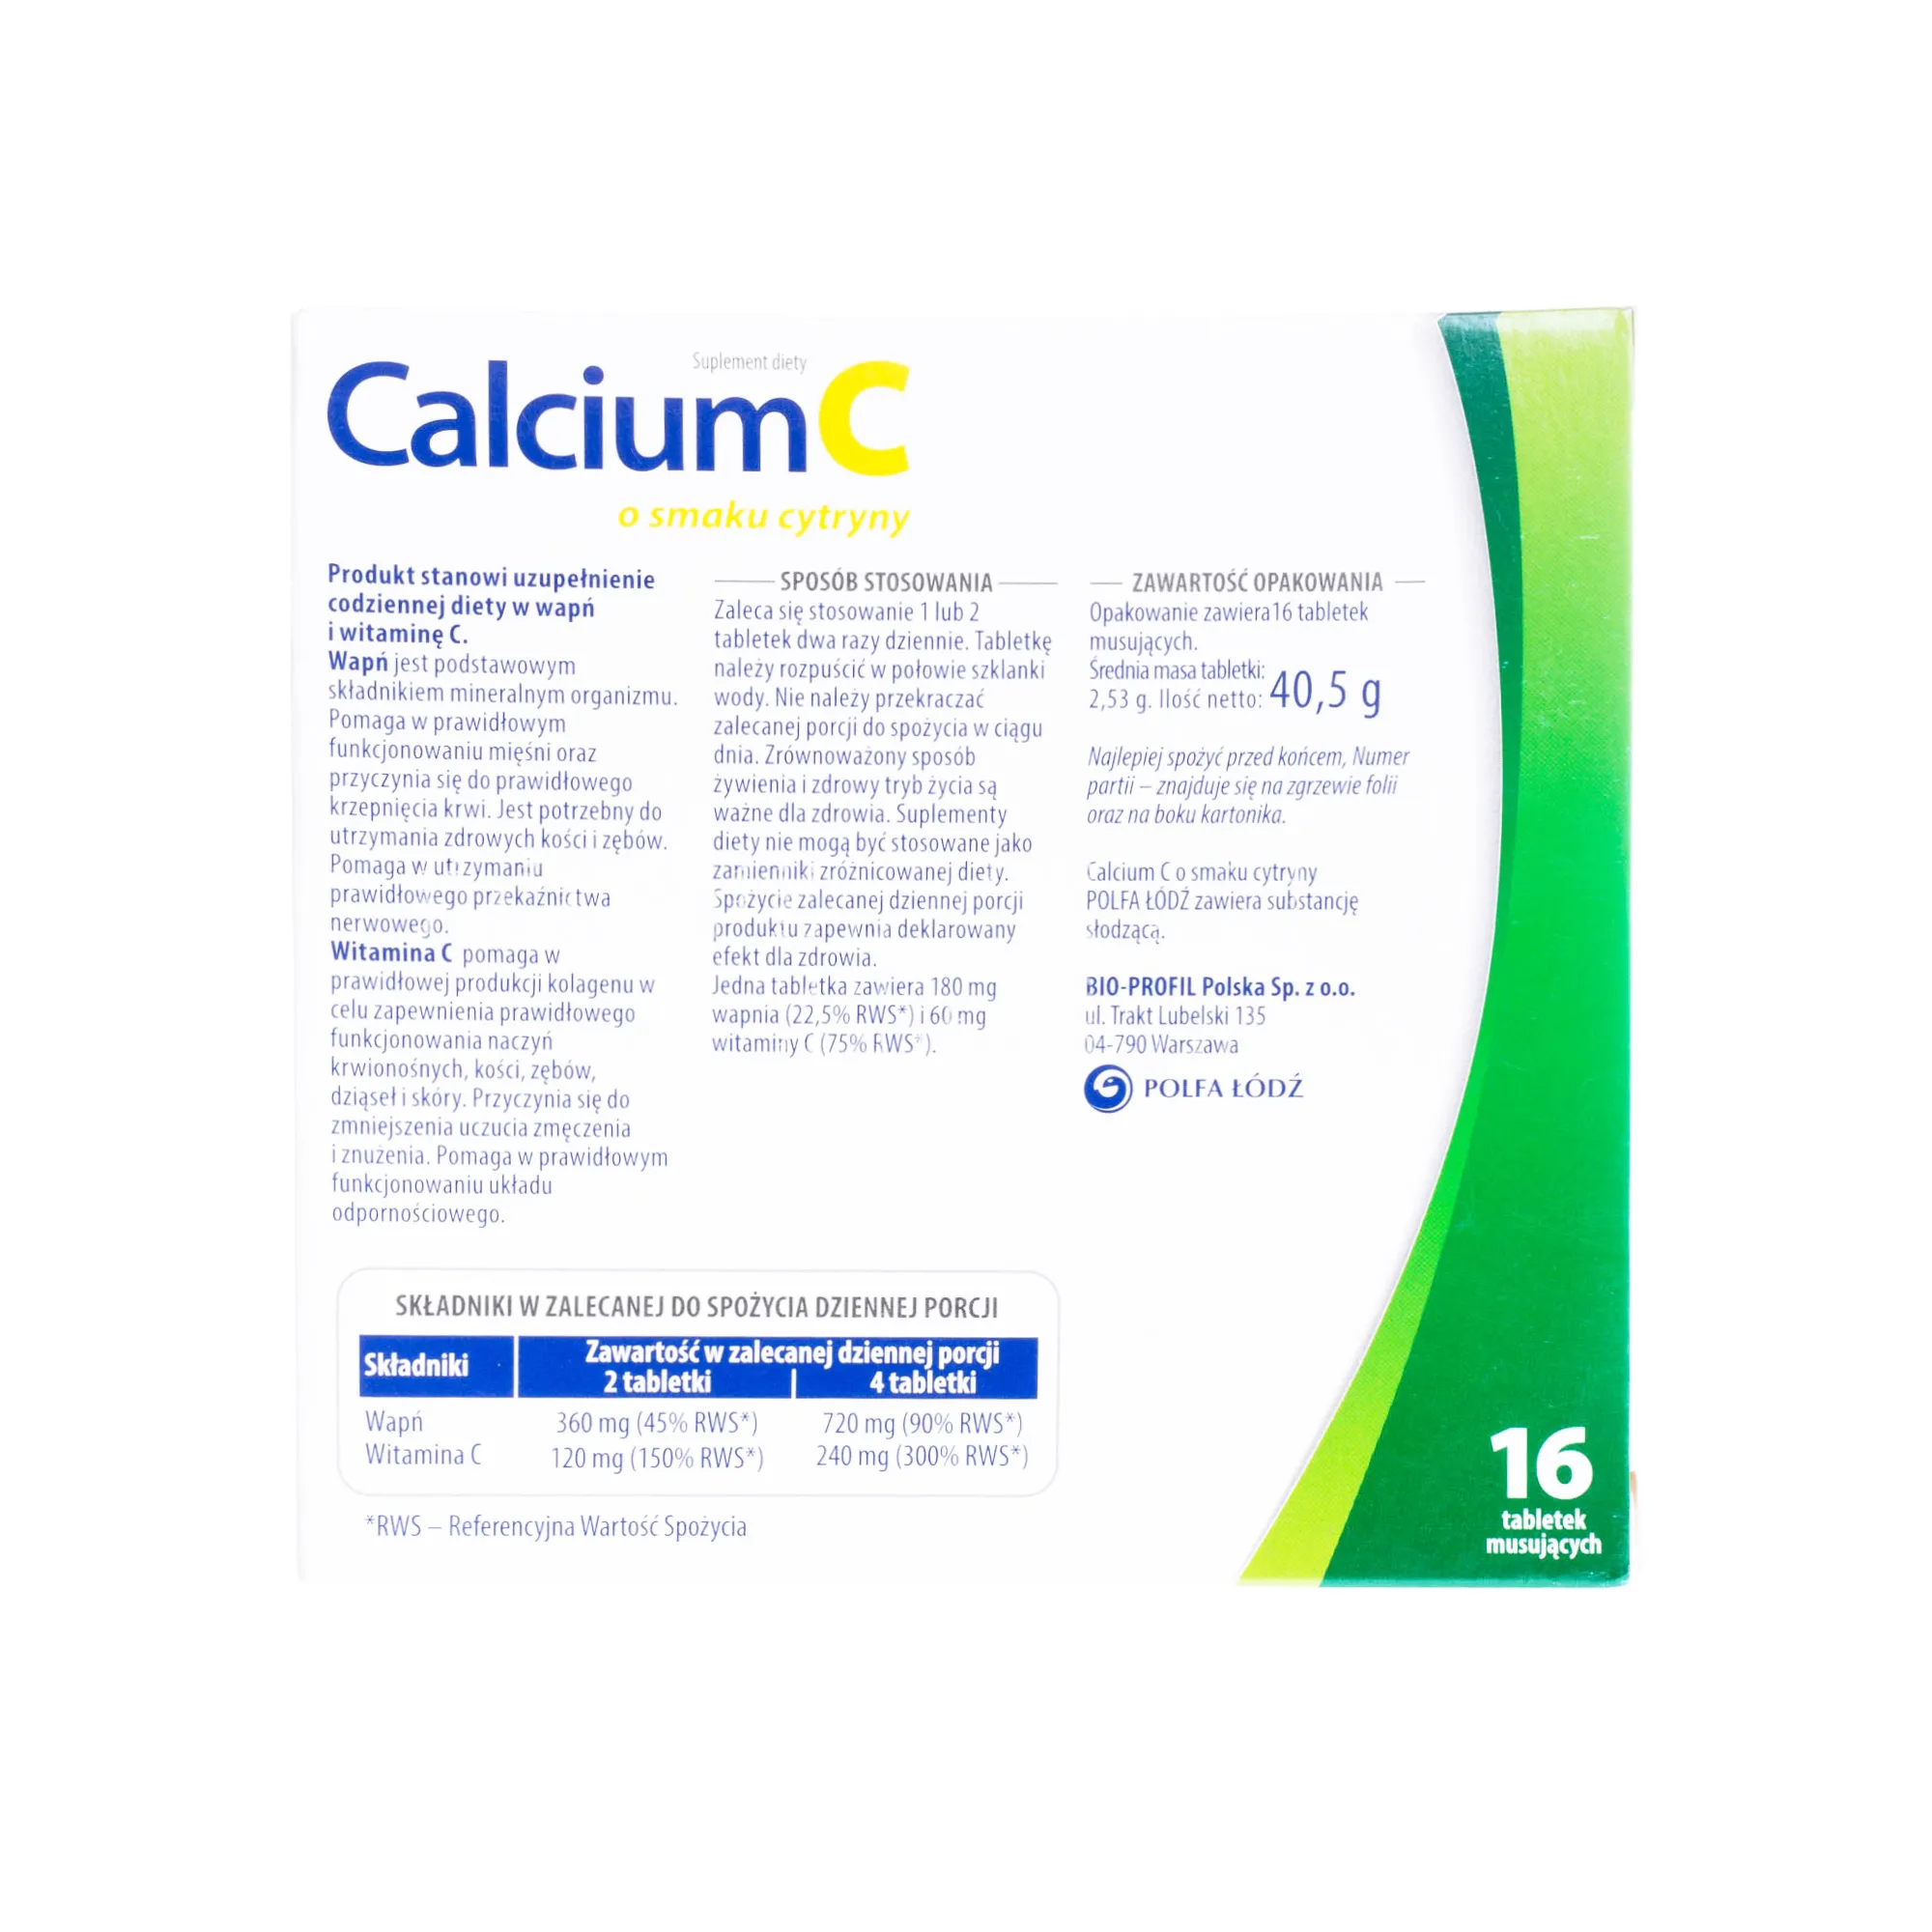 Calcium C o smaku cytryny, suplement diety, 16 tabletek musujących 